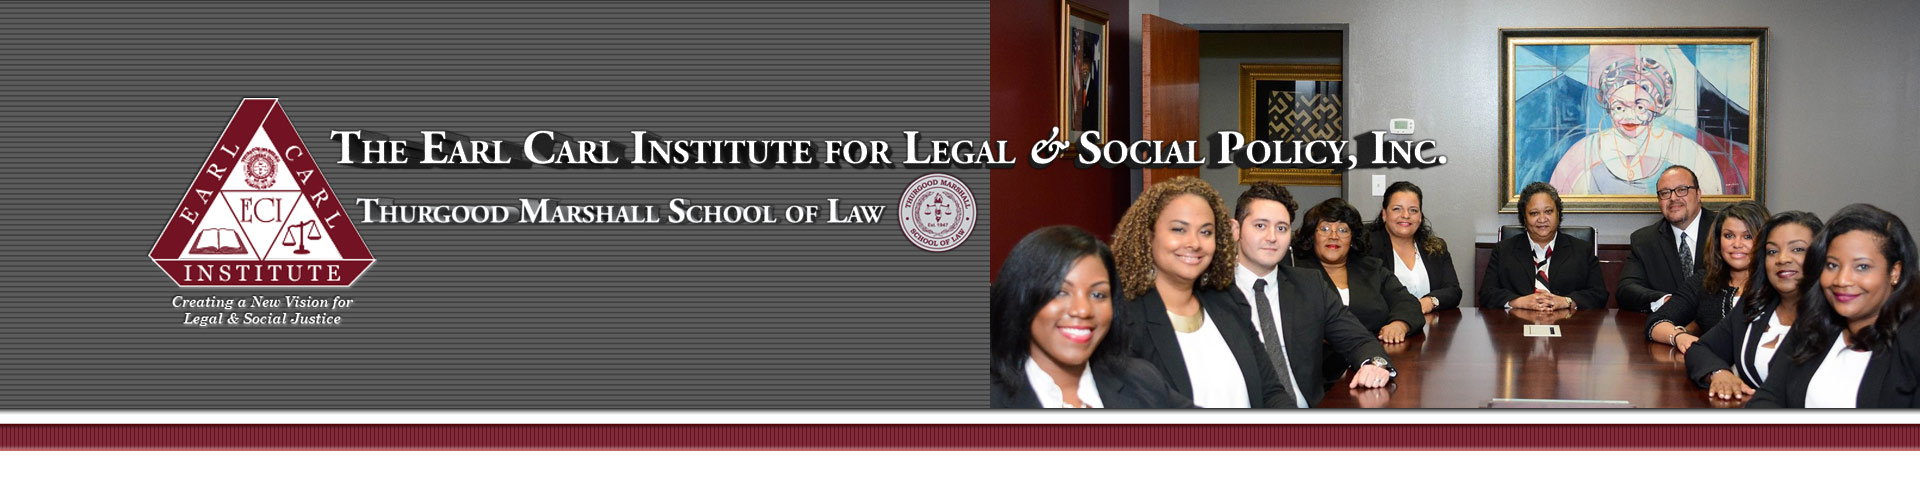 Dannnye K. Holley, Dean and Professor of Law